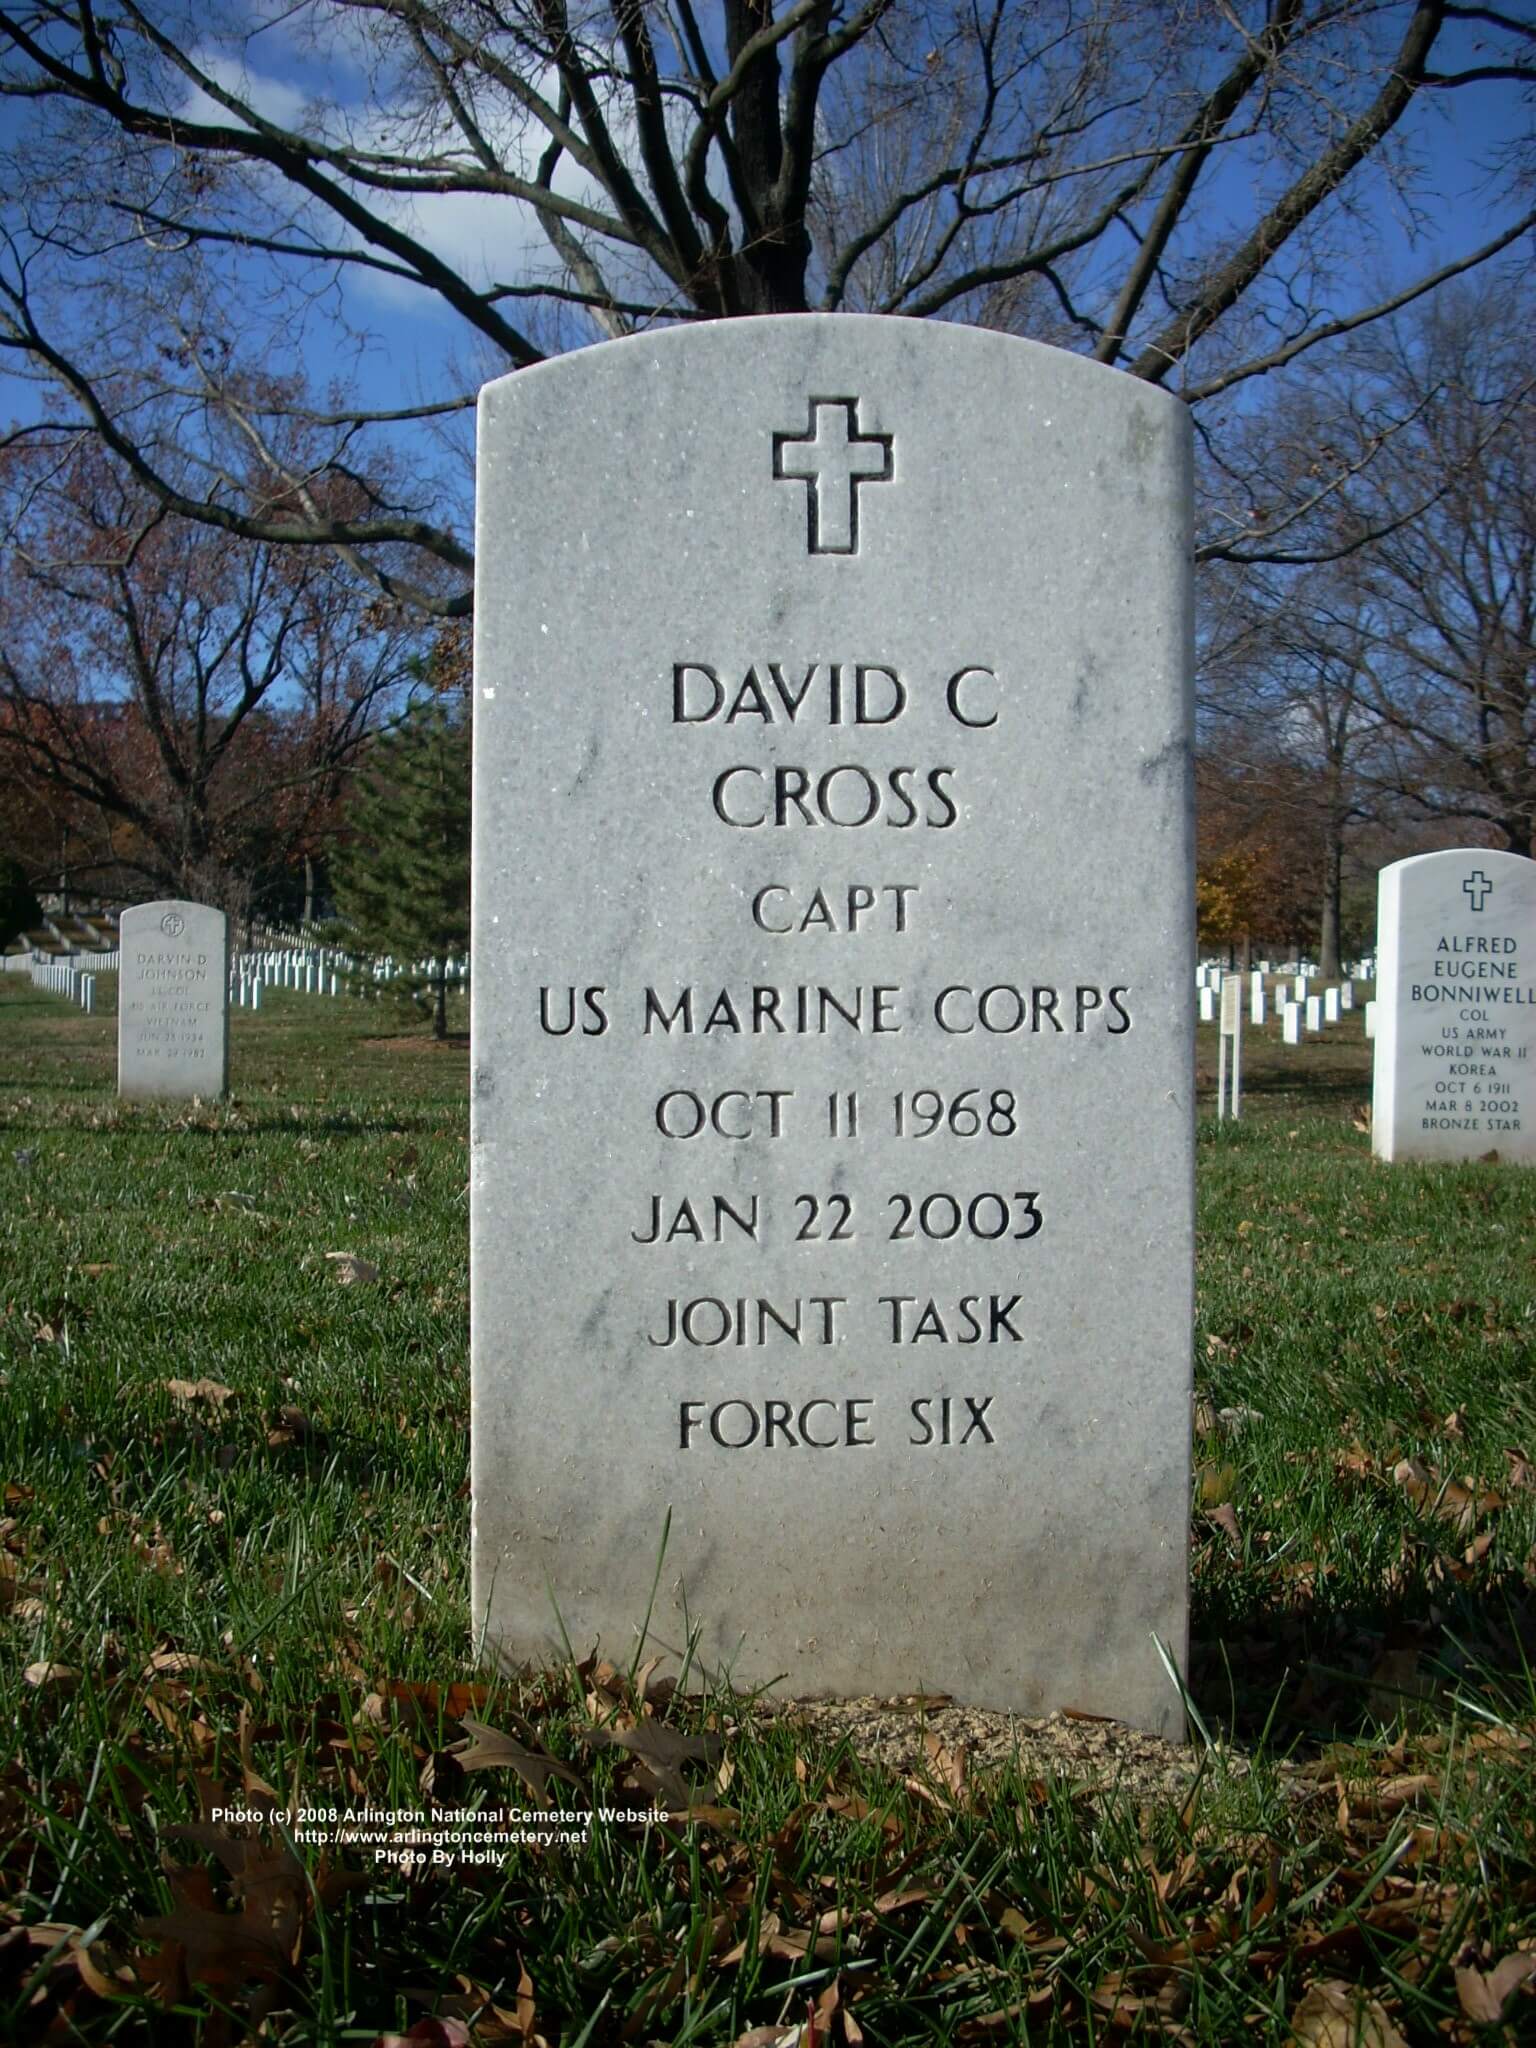 dccross-gravesite-photo-november-2008-003